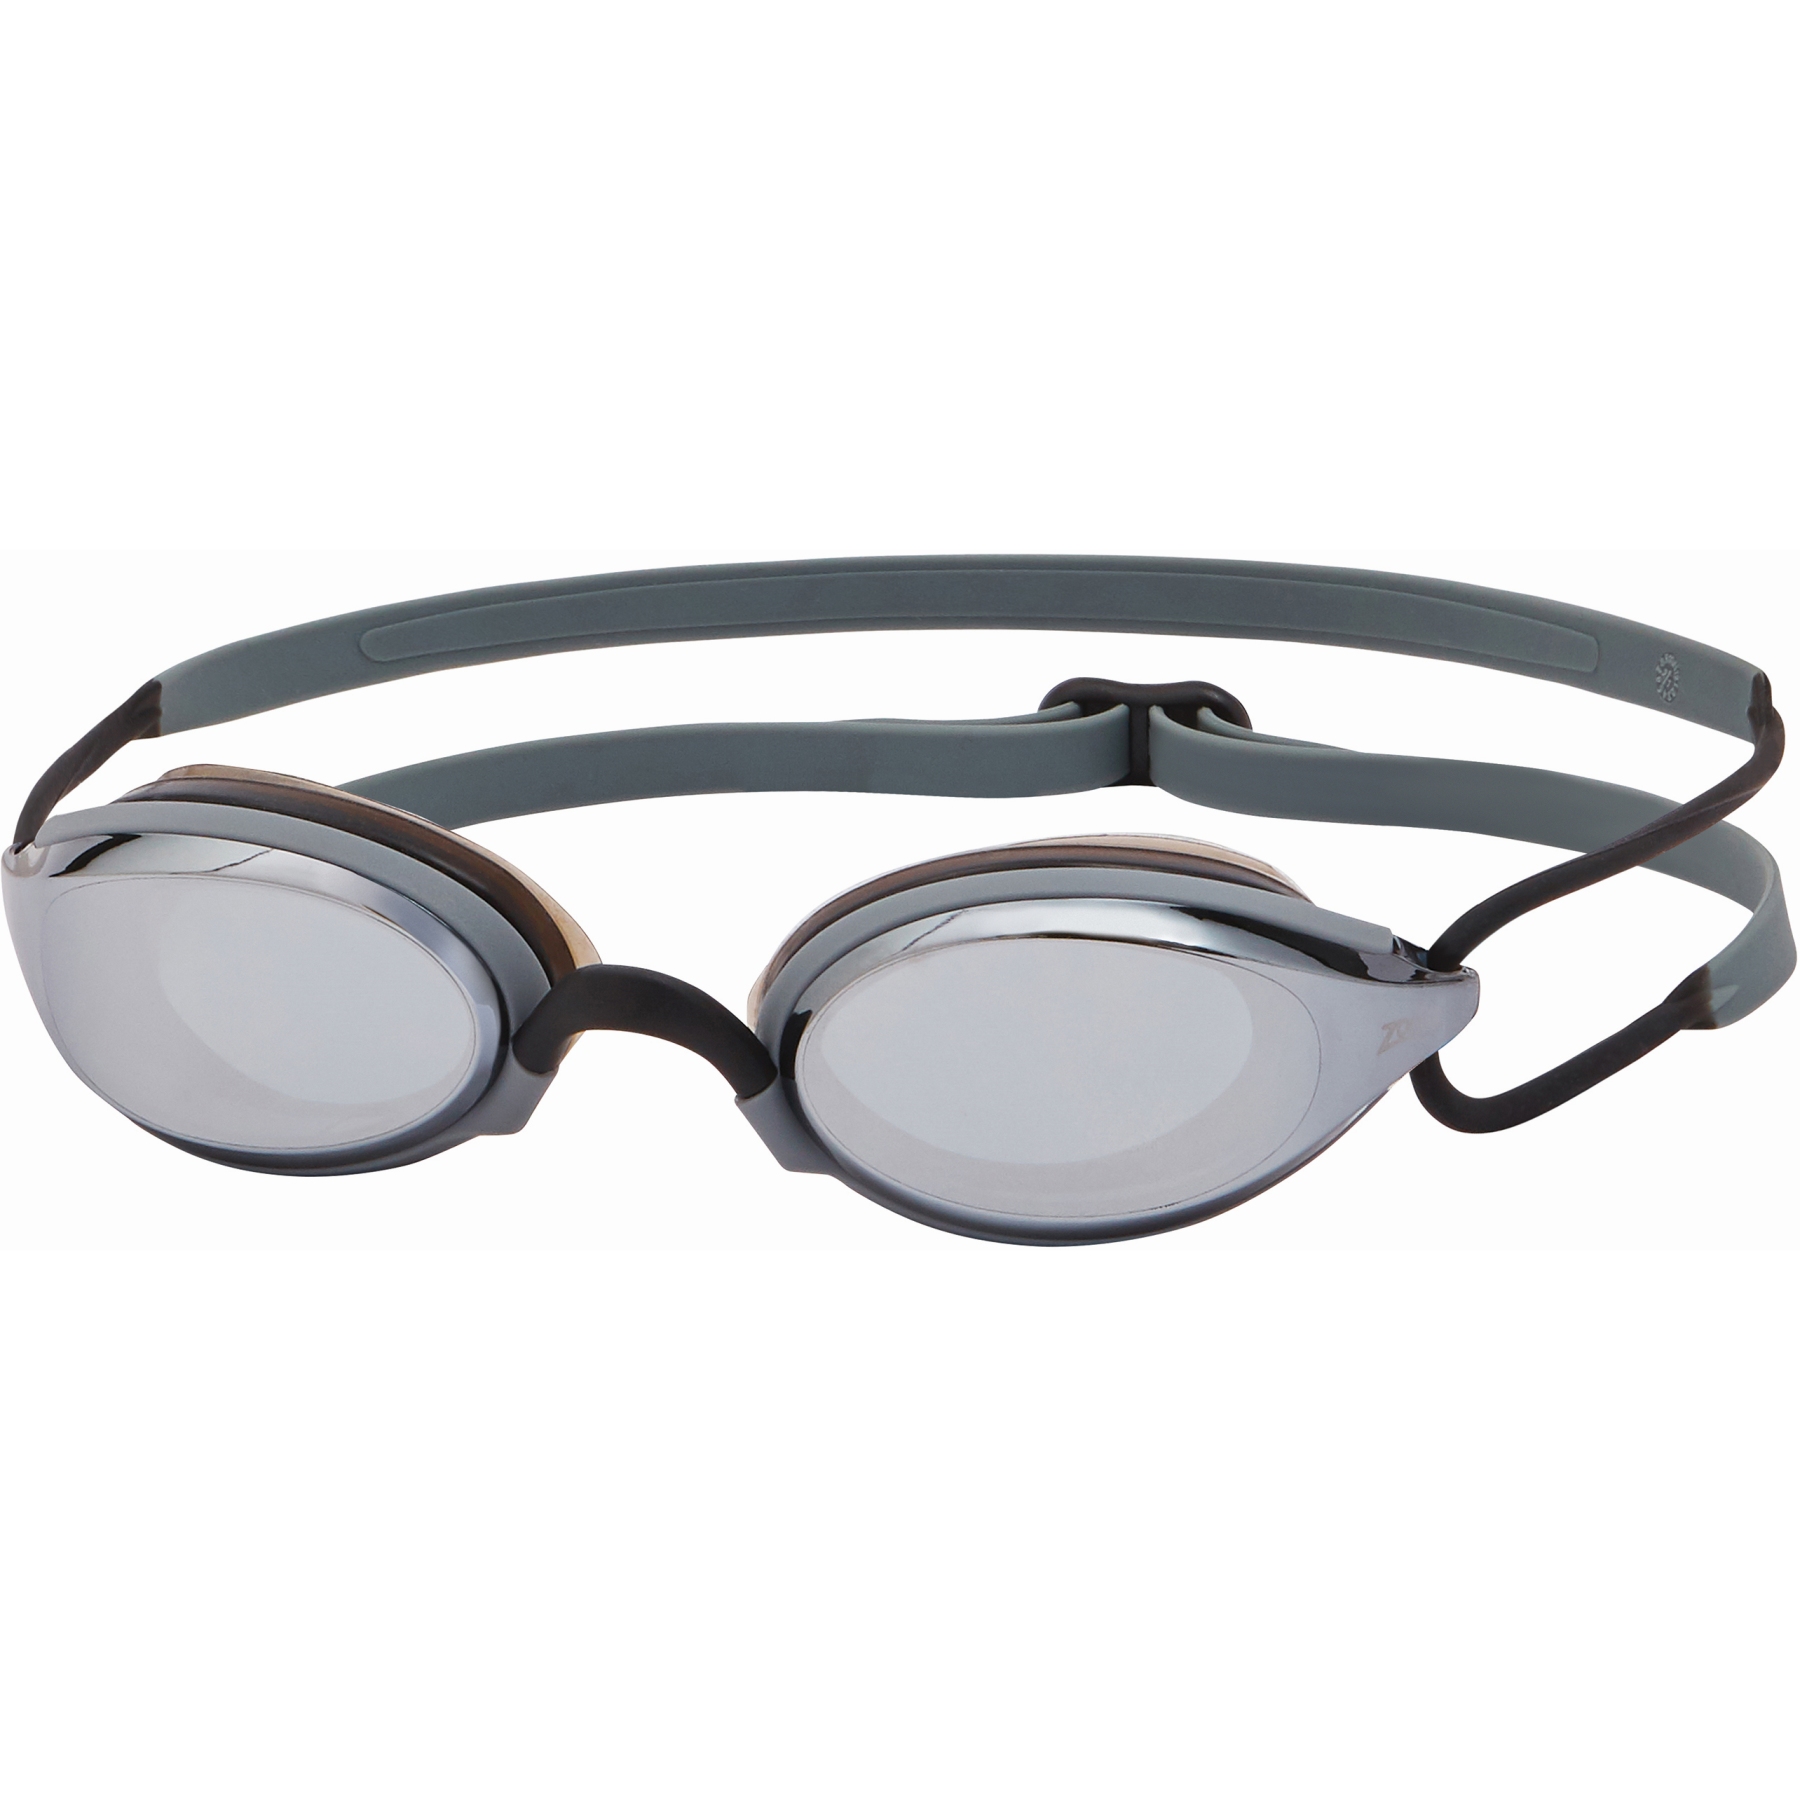 Productfoto van Zoggs Fusion Air Titanium Zwembril - Mirror Smoke Lenses - Black/Grey